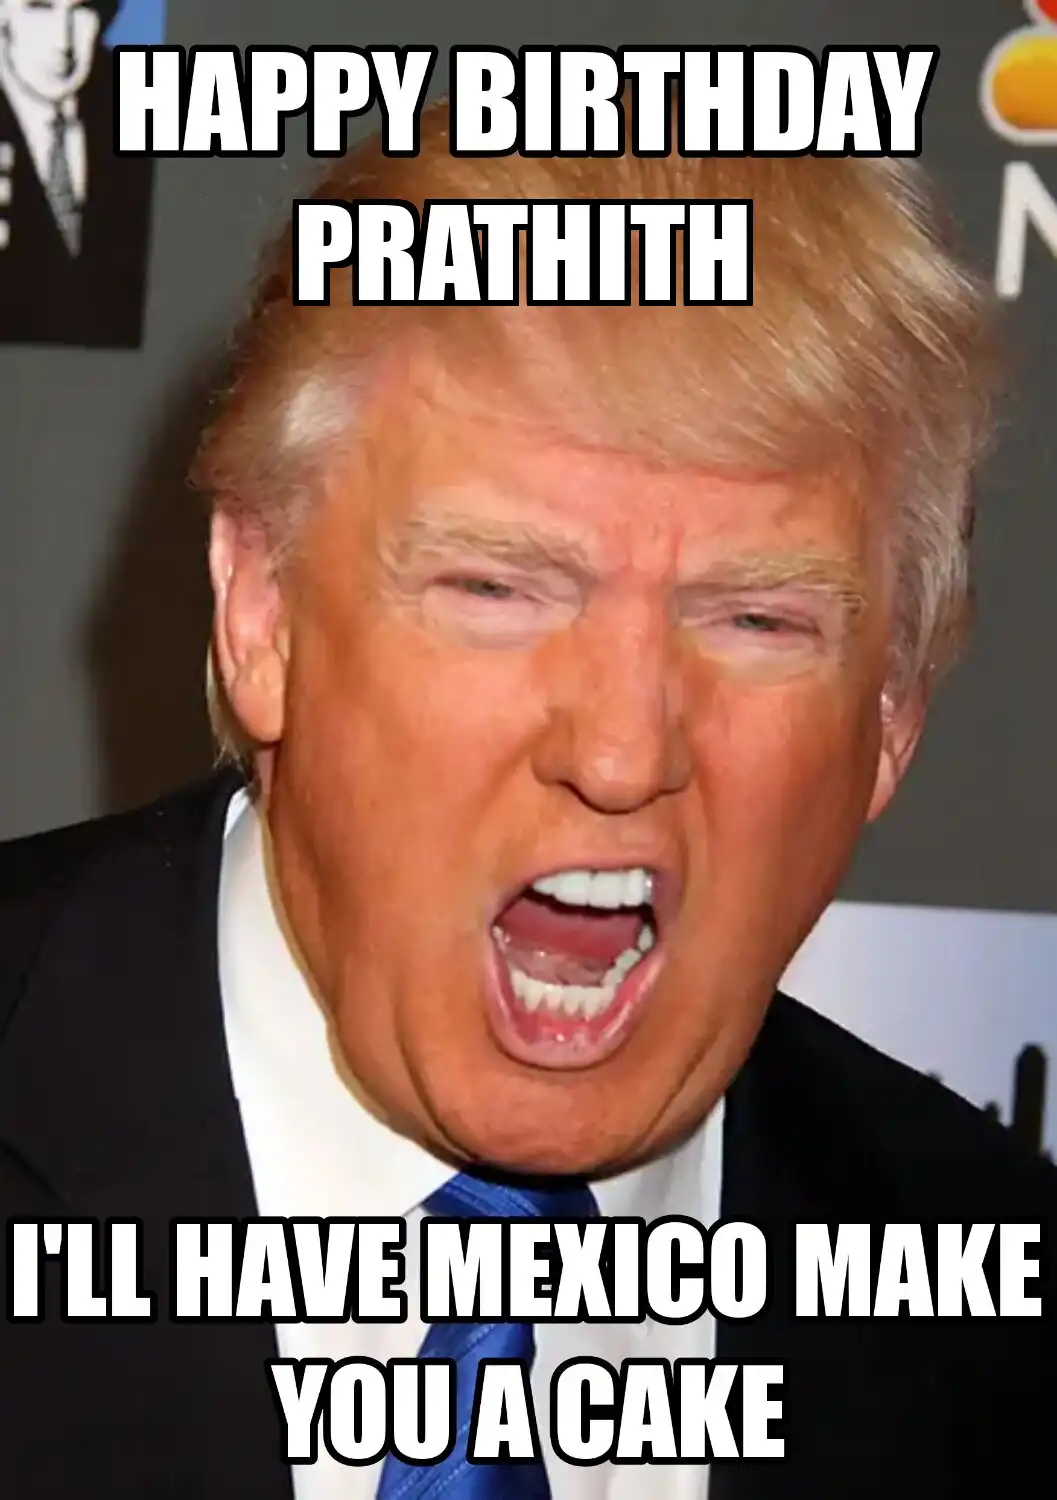 Happy Birthday Prathith Mexico Make You A Cake Meme